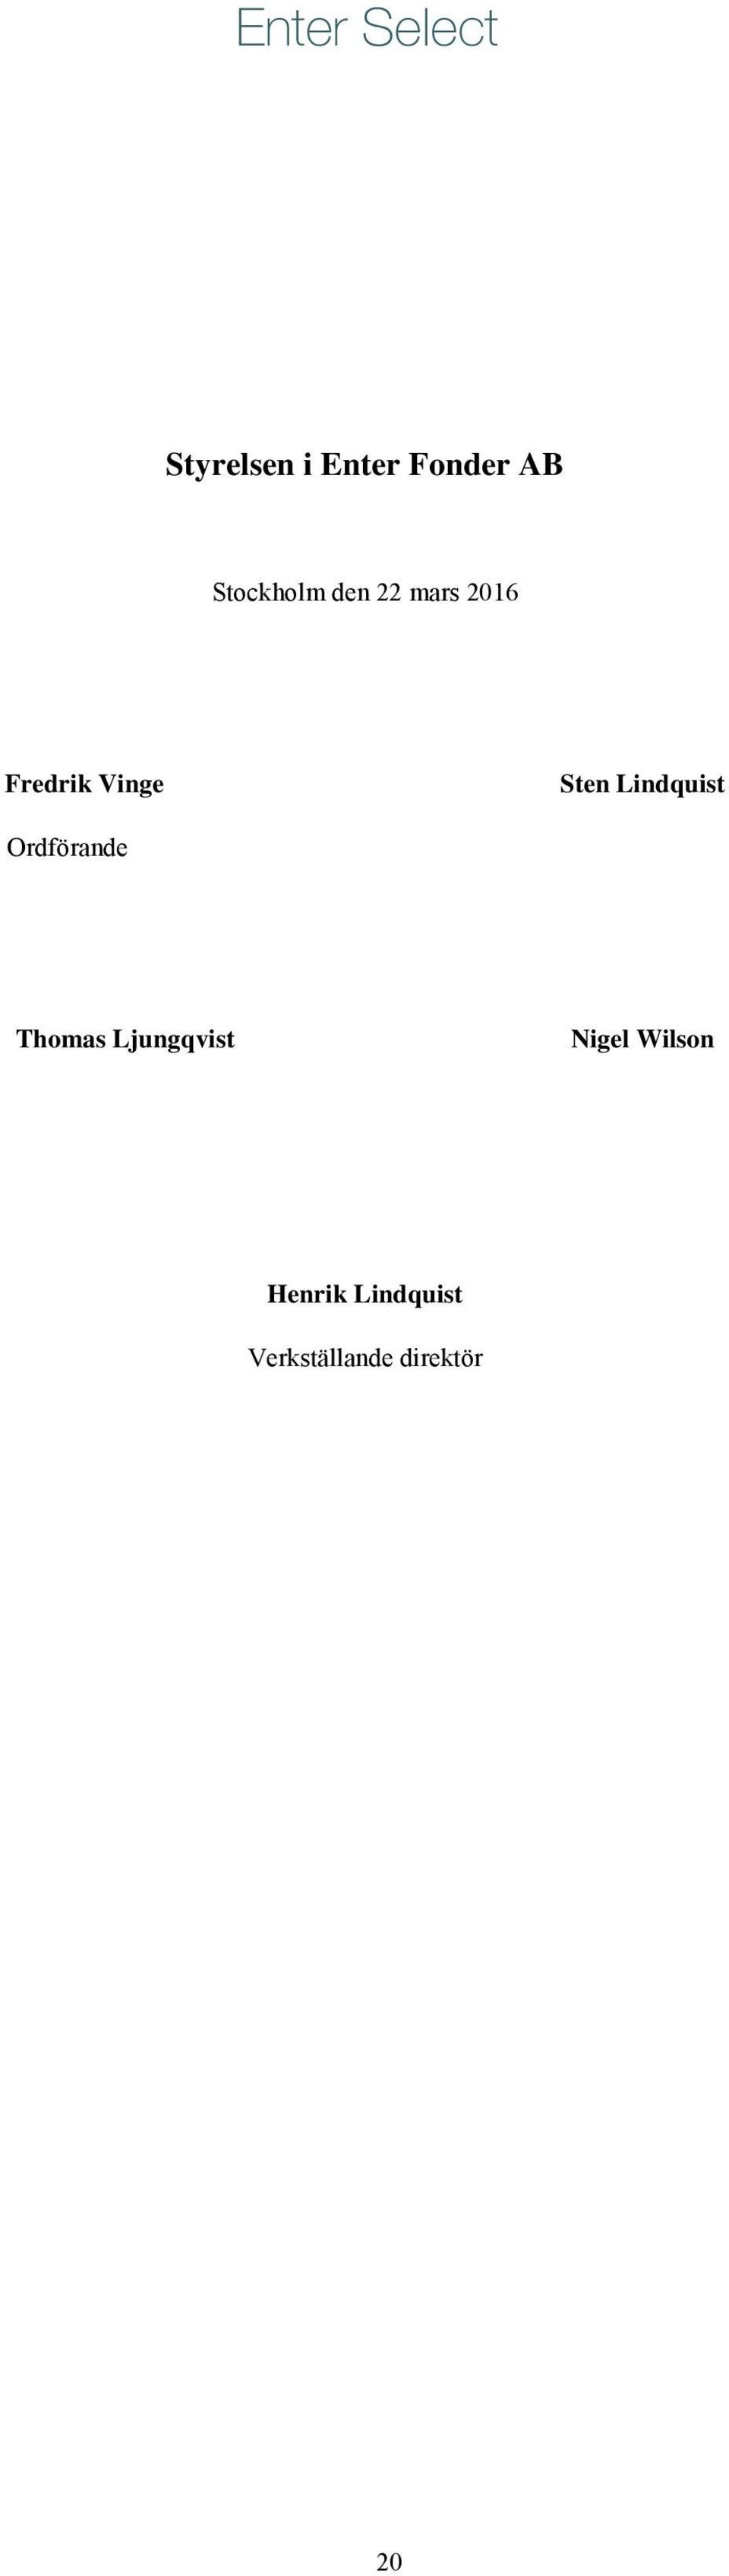 Lindquist Ordförande Thomas Ljungqvist Nigel